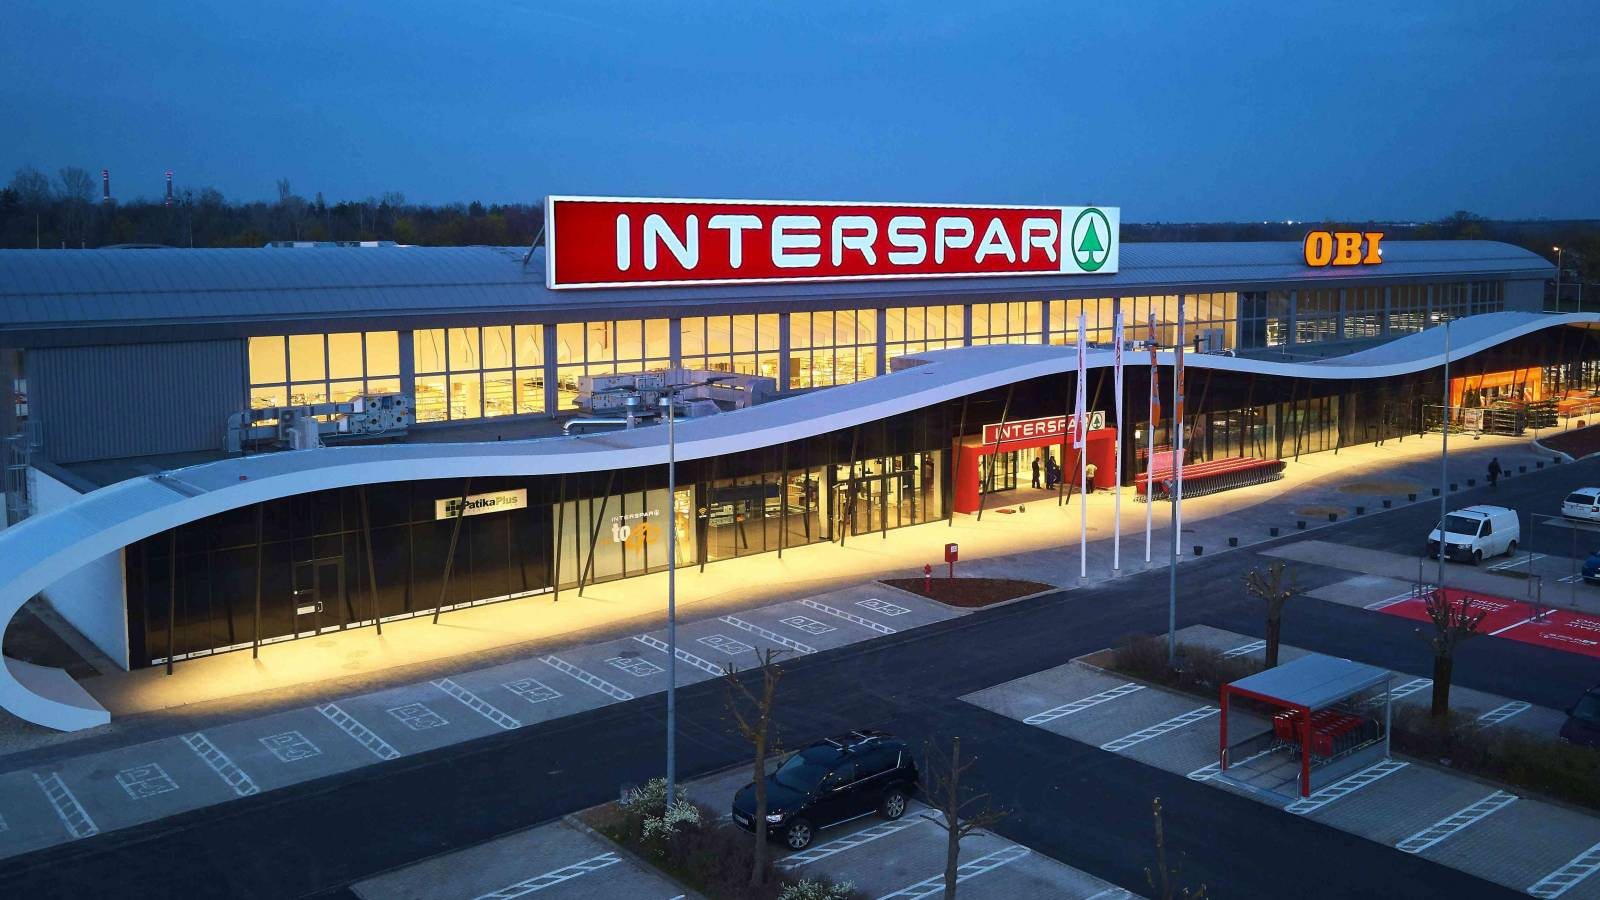 The INTERSPAR on Siklósi Road in Pécs is open.